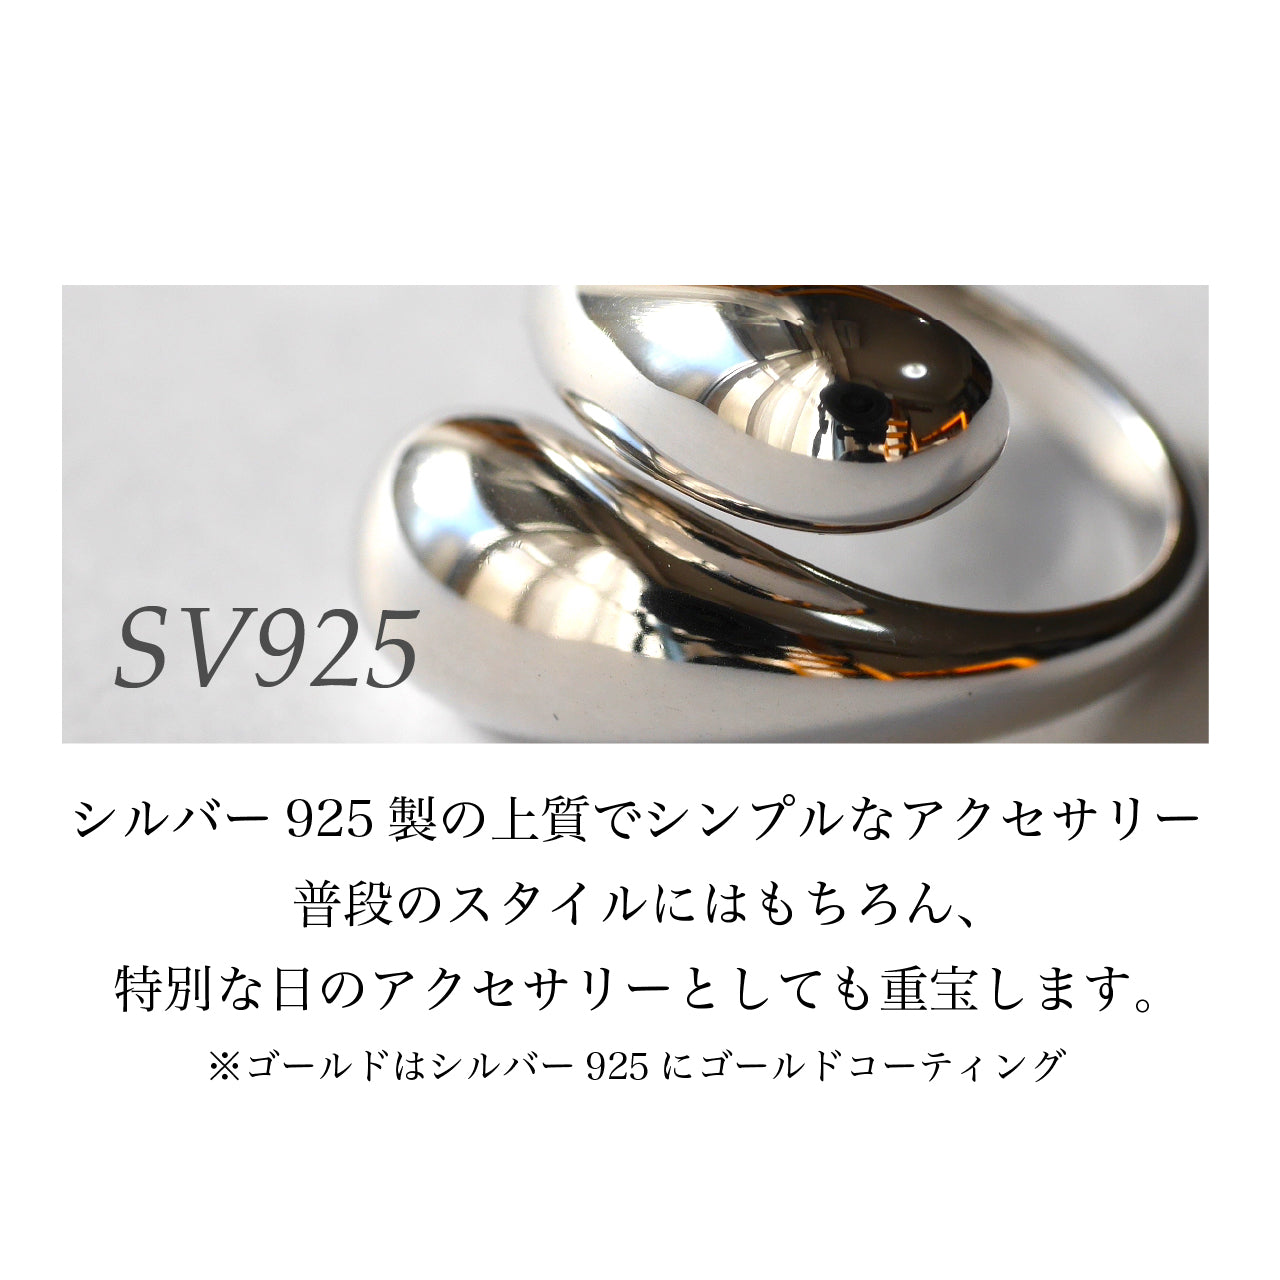 【La Closet】ボリュームデザインリング SILVER925製 フリーサイズ シンプル ゴールド シルバーアクセサリー 純銀 リング 指輪 ピンキーリング ファランジリング ミディリング